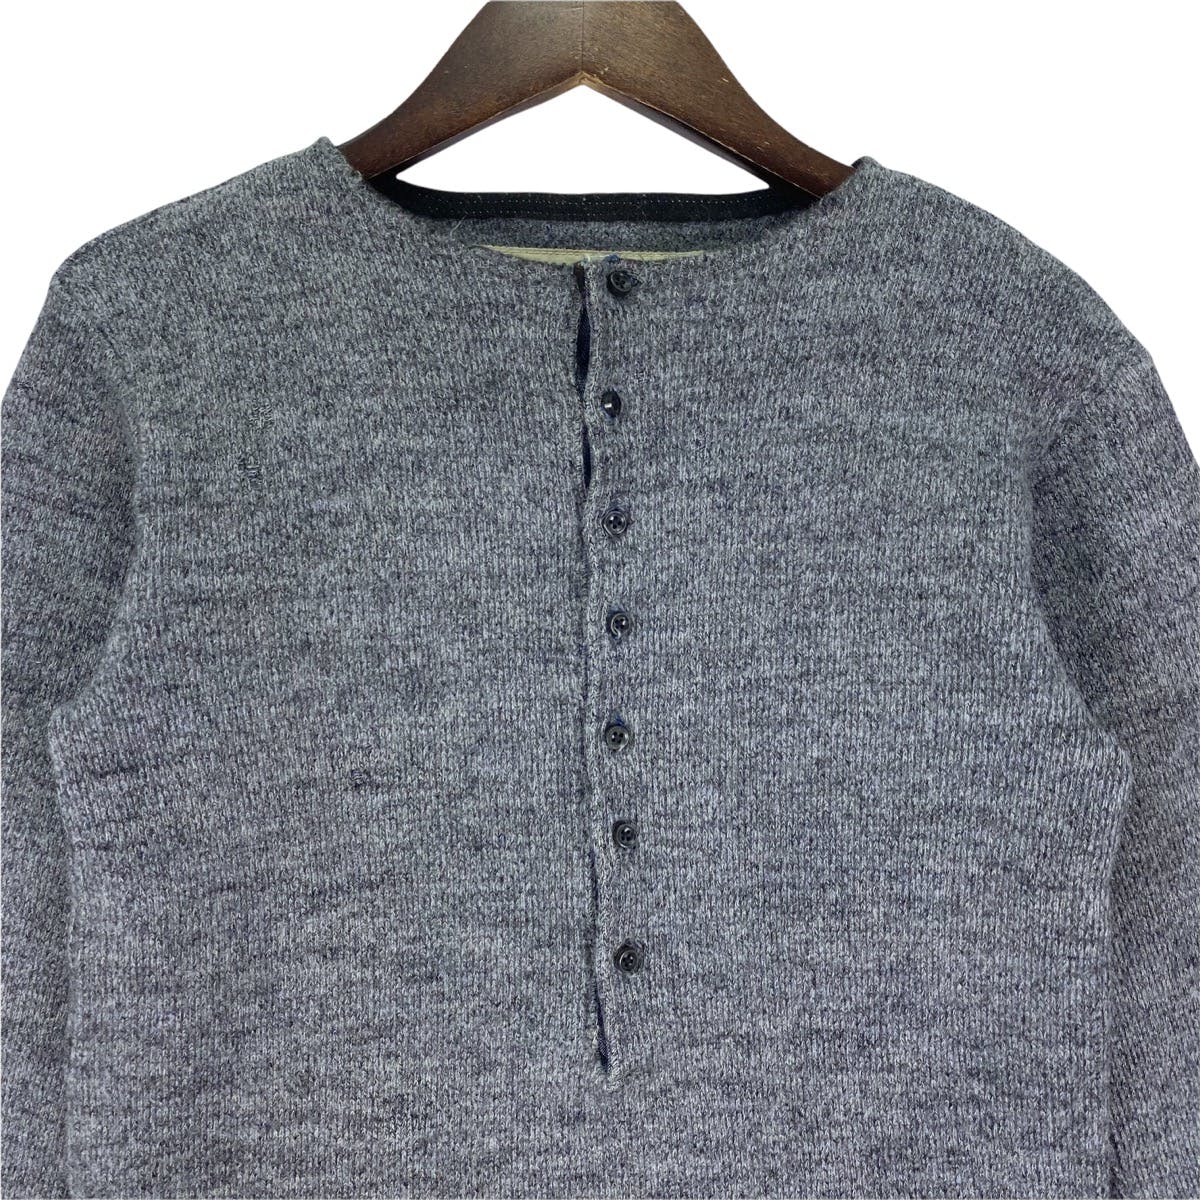 Kapital Hirata Half Buttoned Wool Long Sleeve - 5